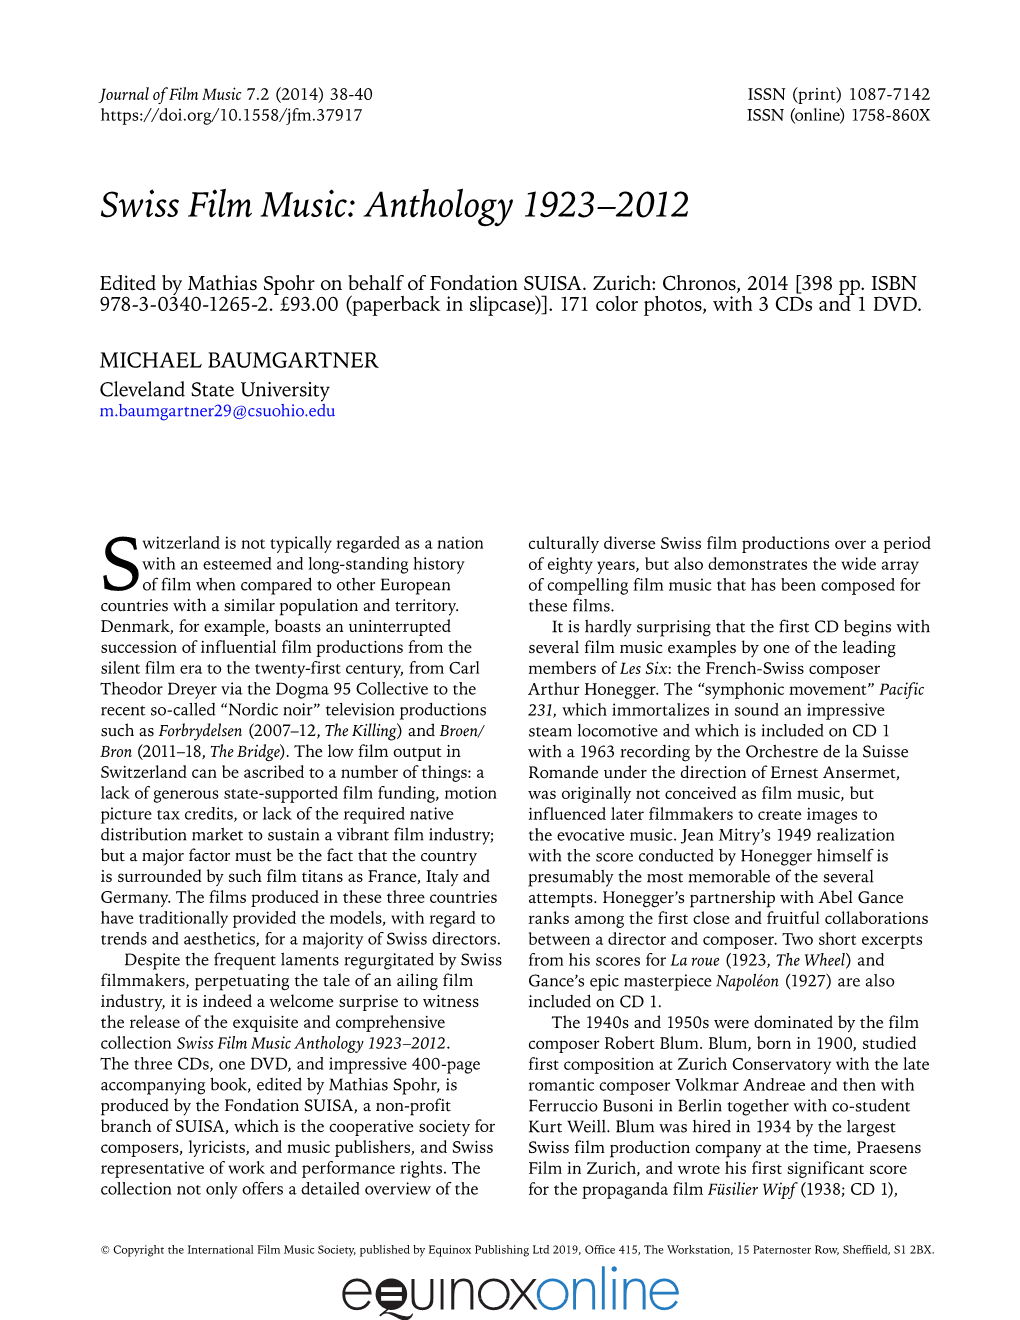 Swiss Film Music: Anthology 1923–2012